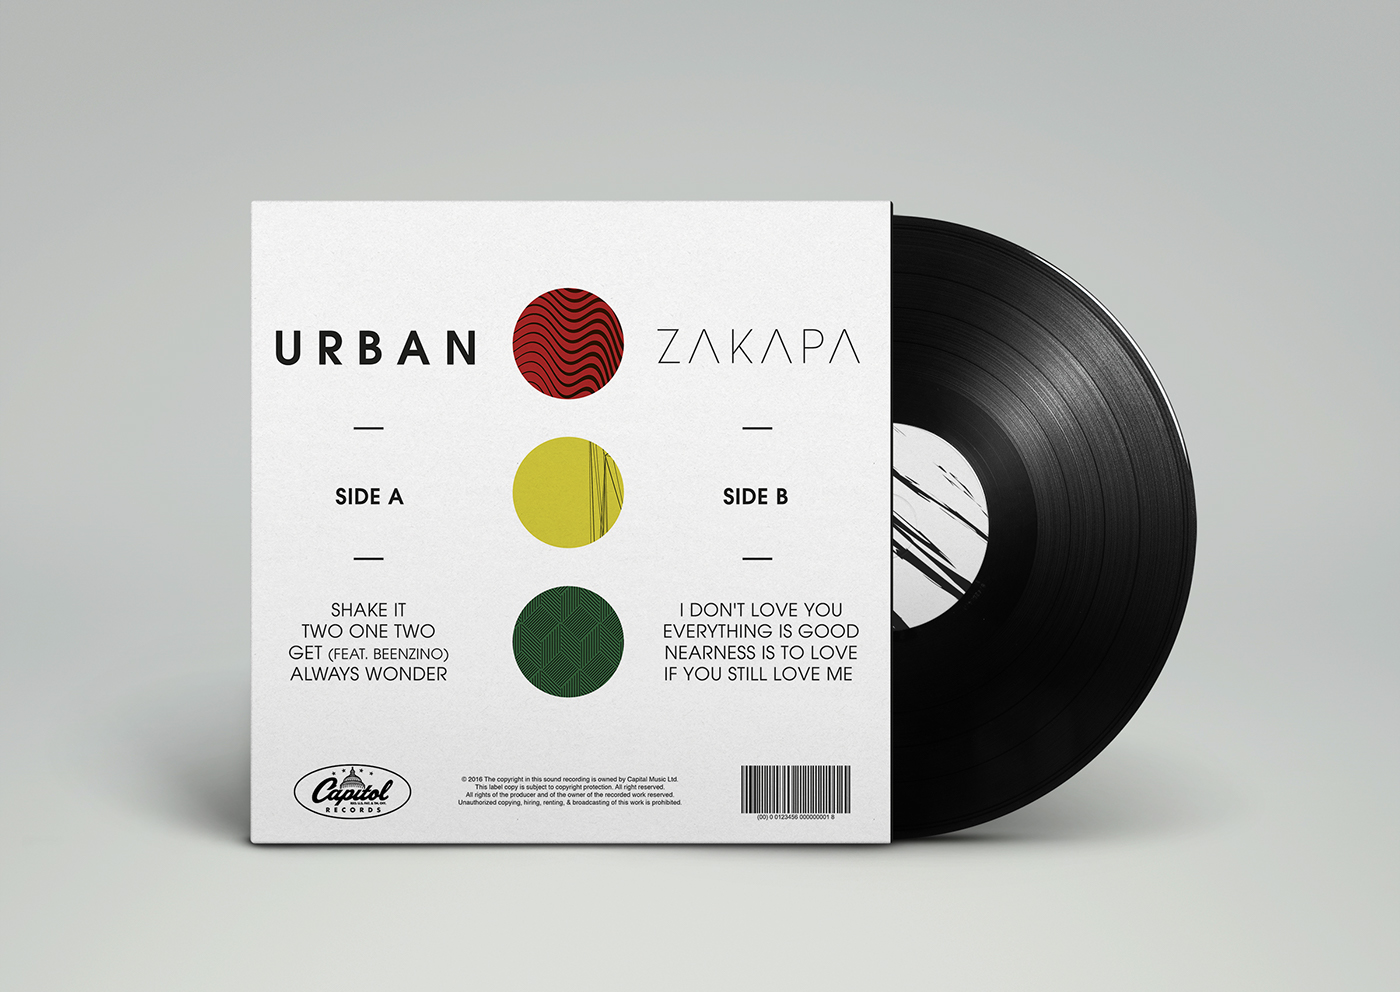 vinyl cover design music Urban zakapa